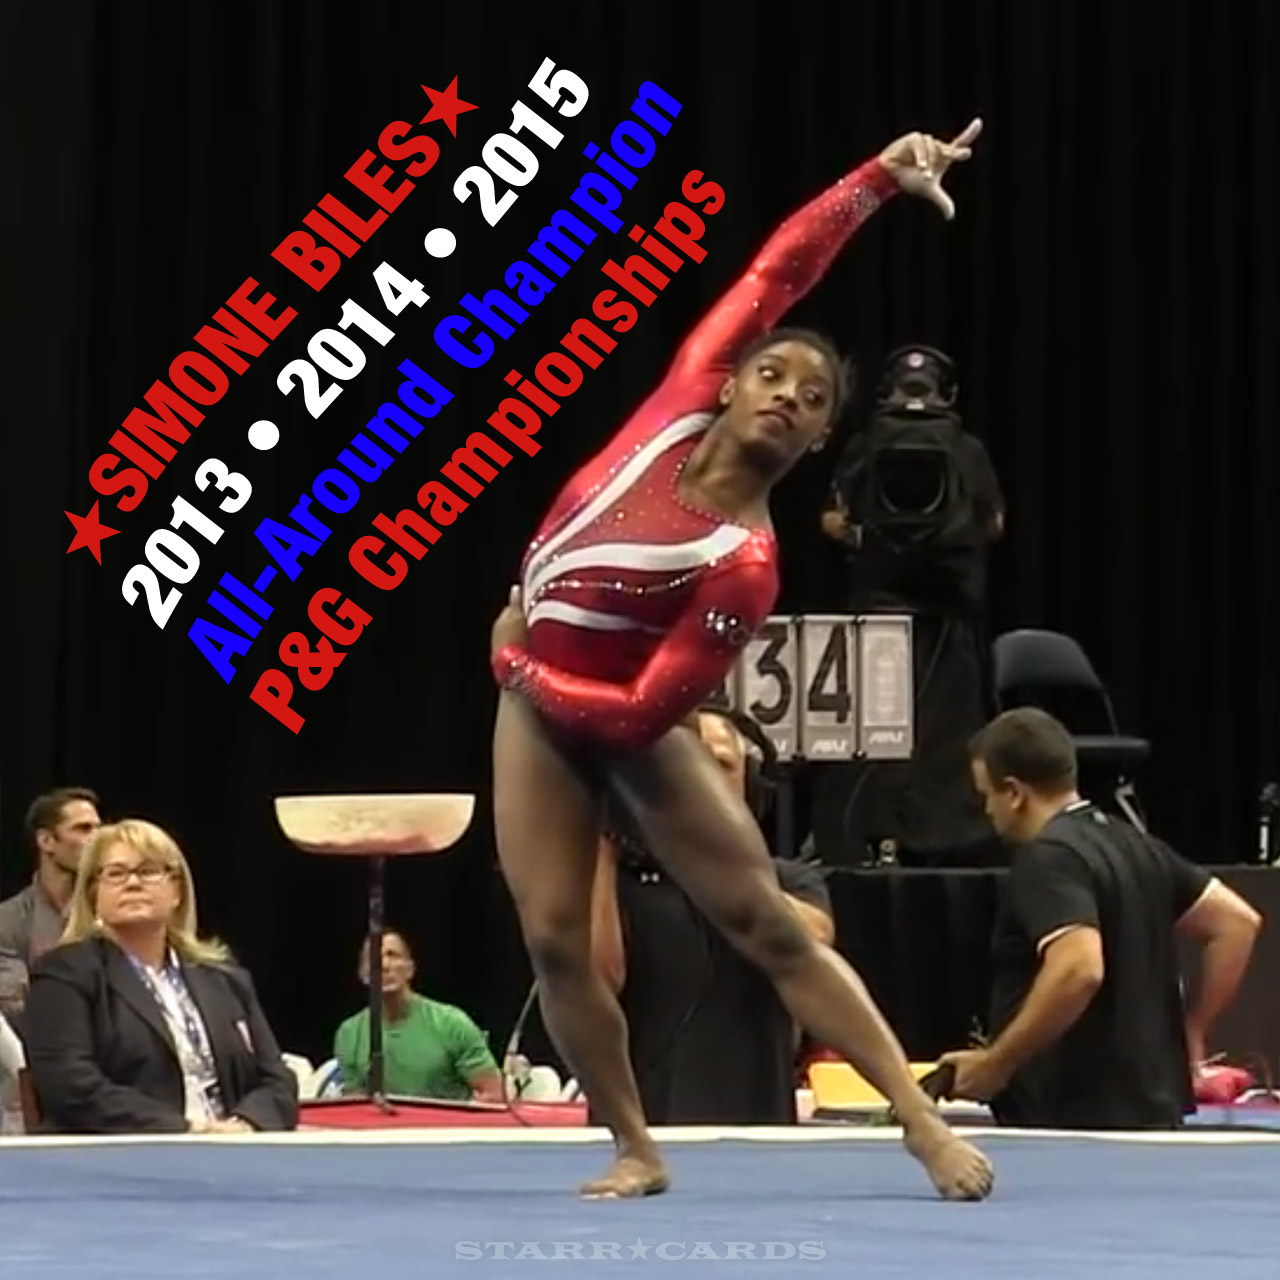 Gymnast Simone Biles three-peats as U.S. All-Around Champion